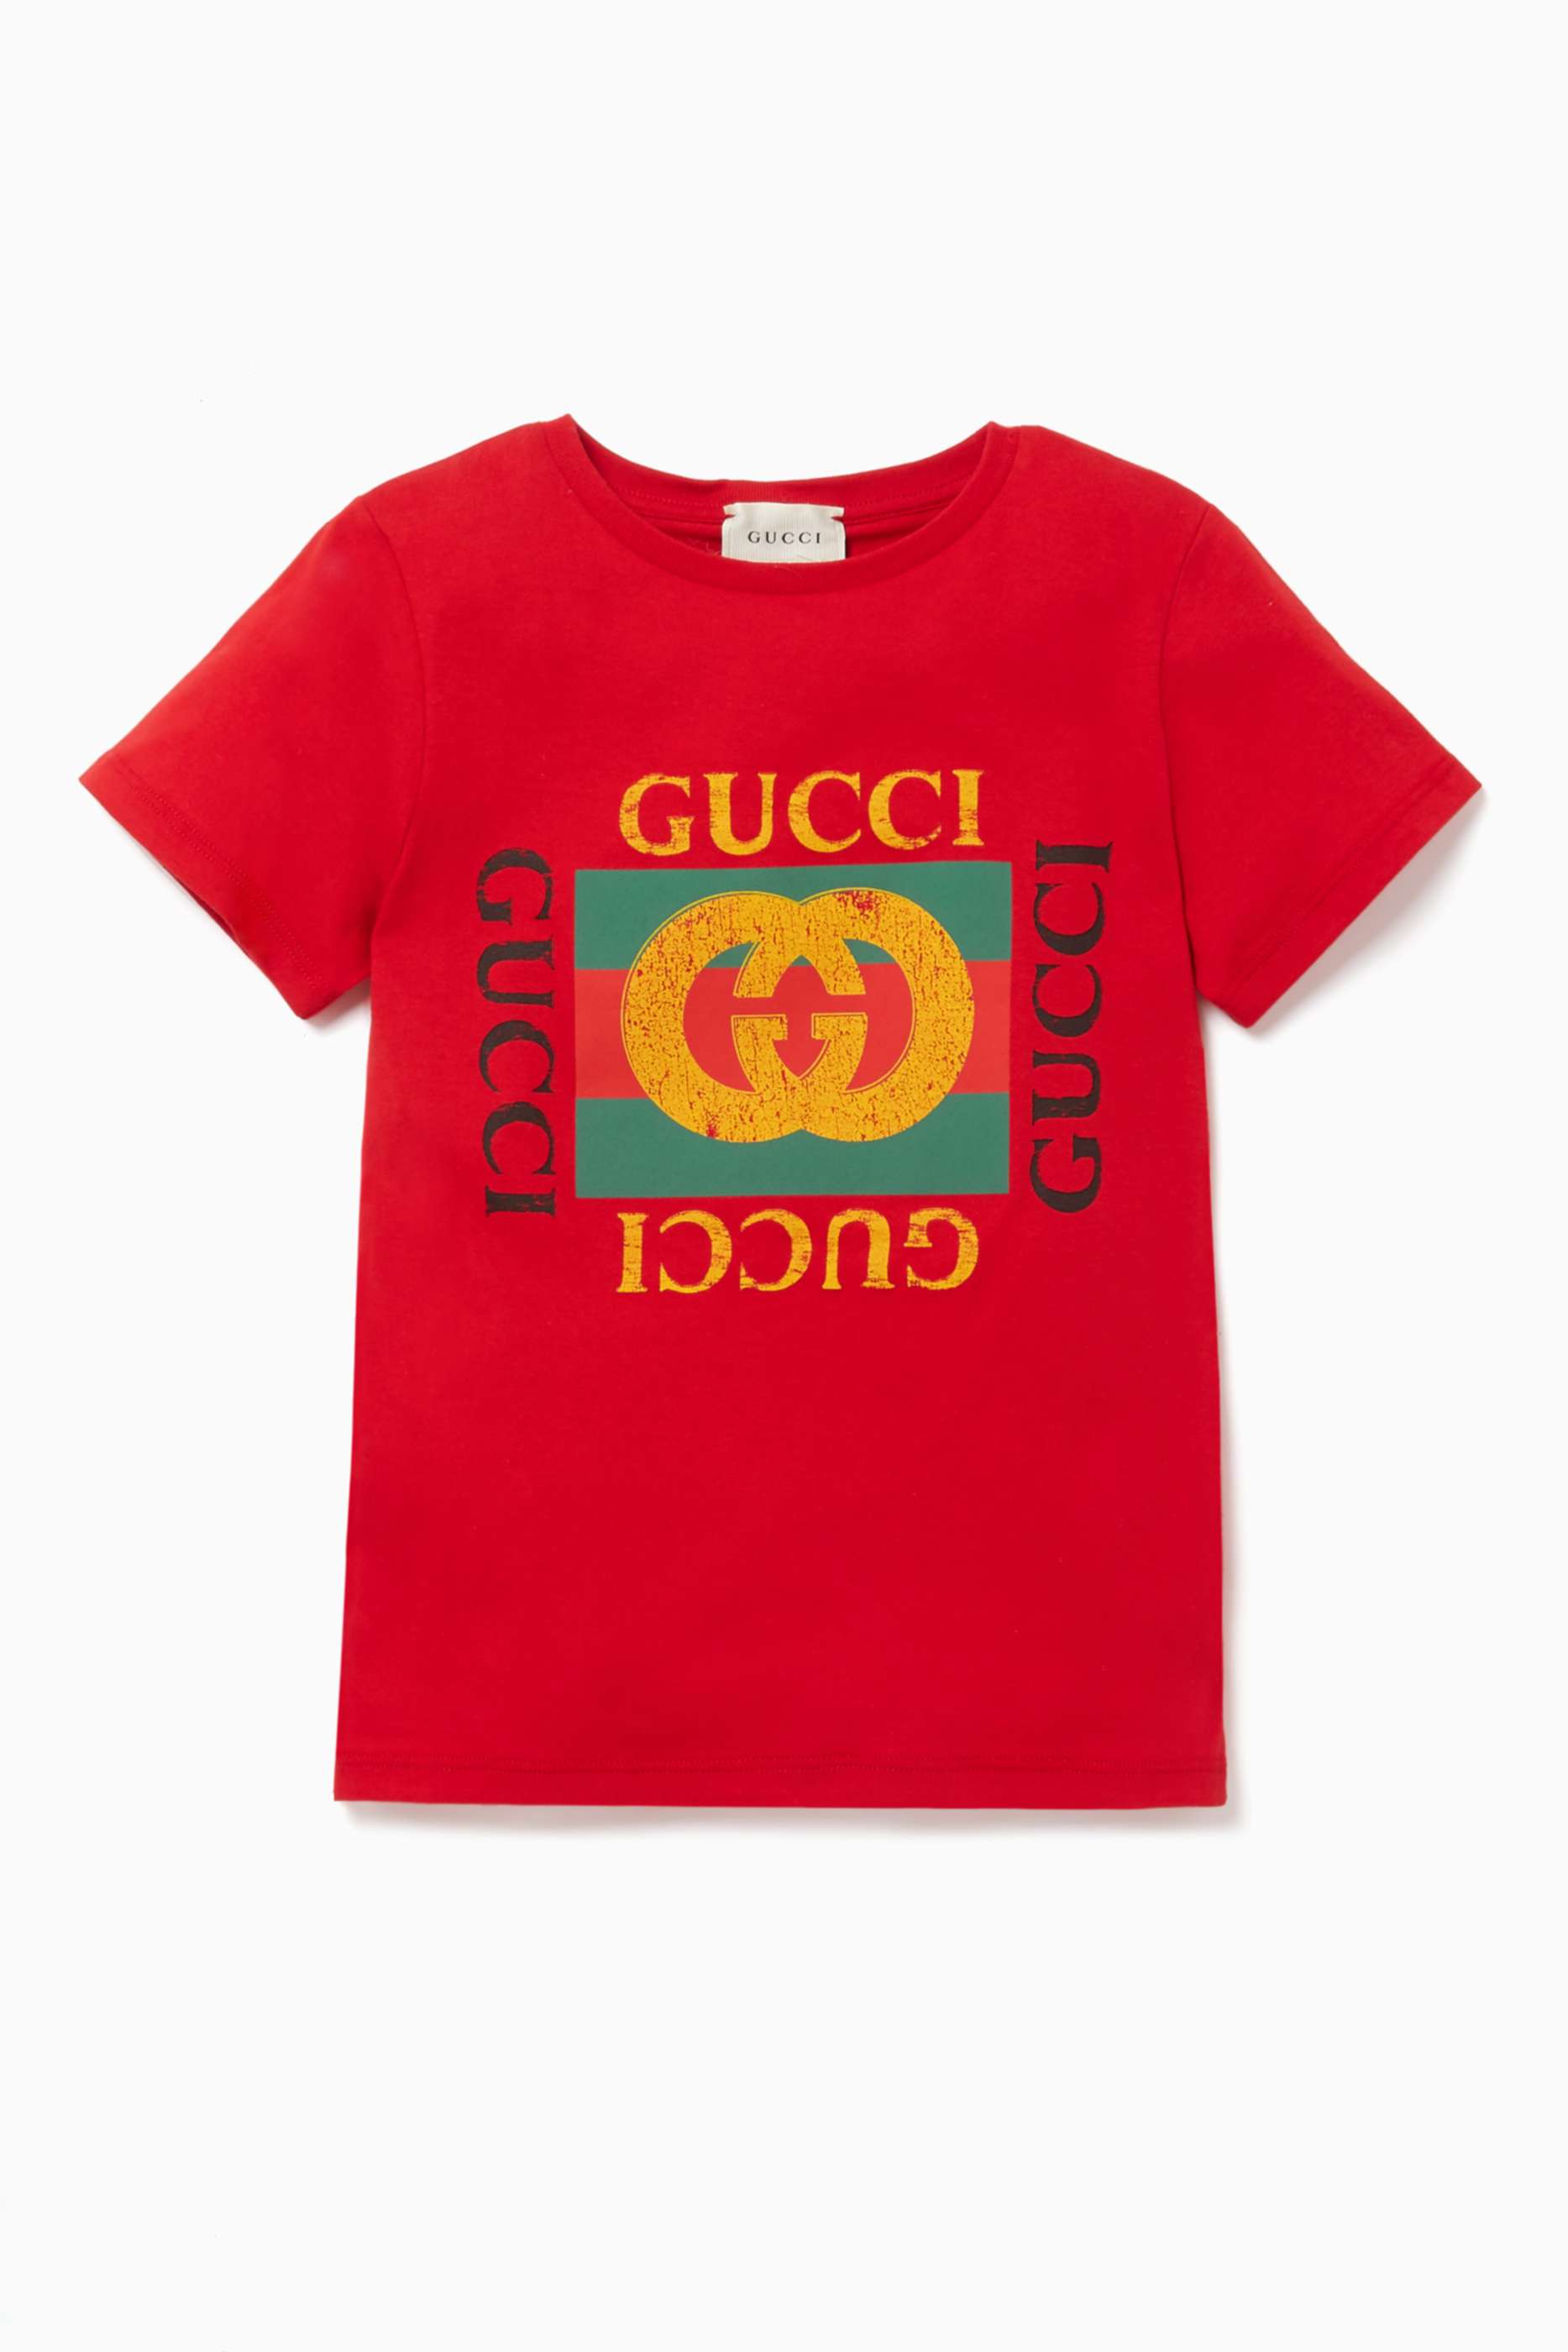 Shop Gucci White Retro Logo Print T-Shirt for Kids | Ounass Kuwait